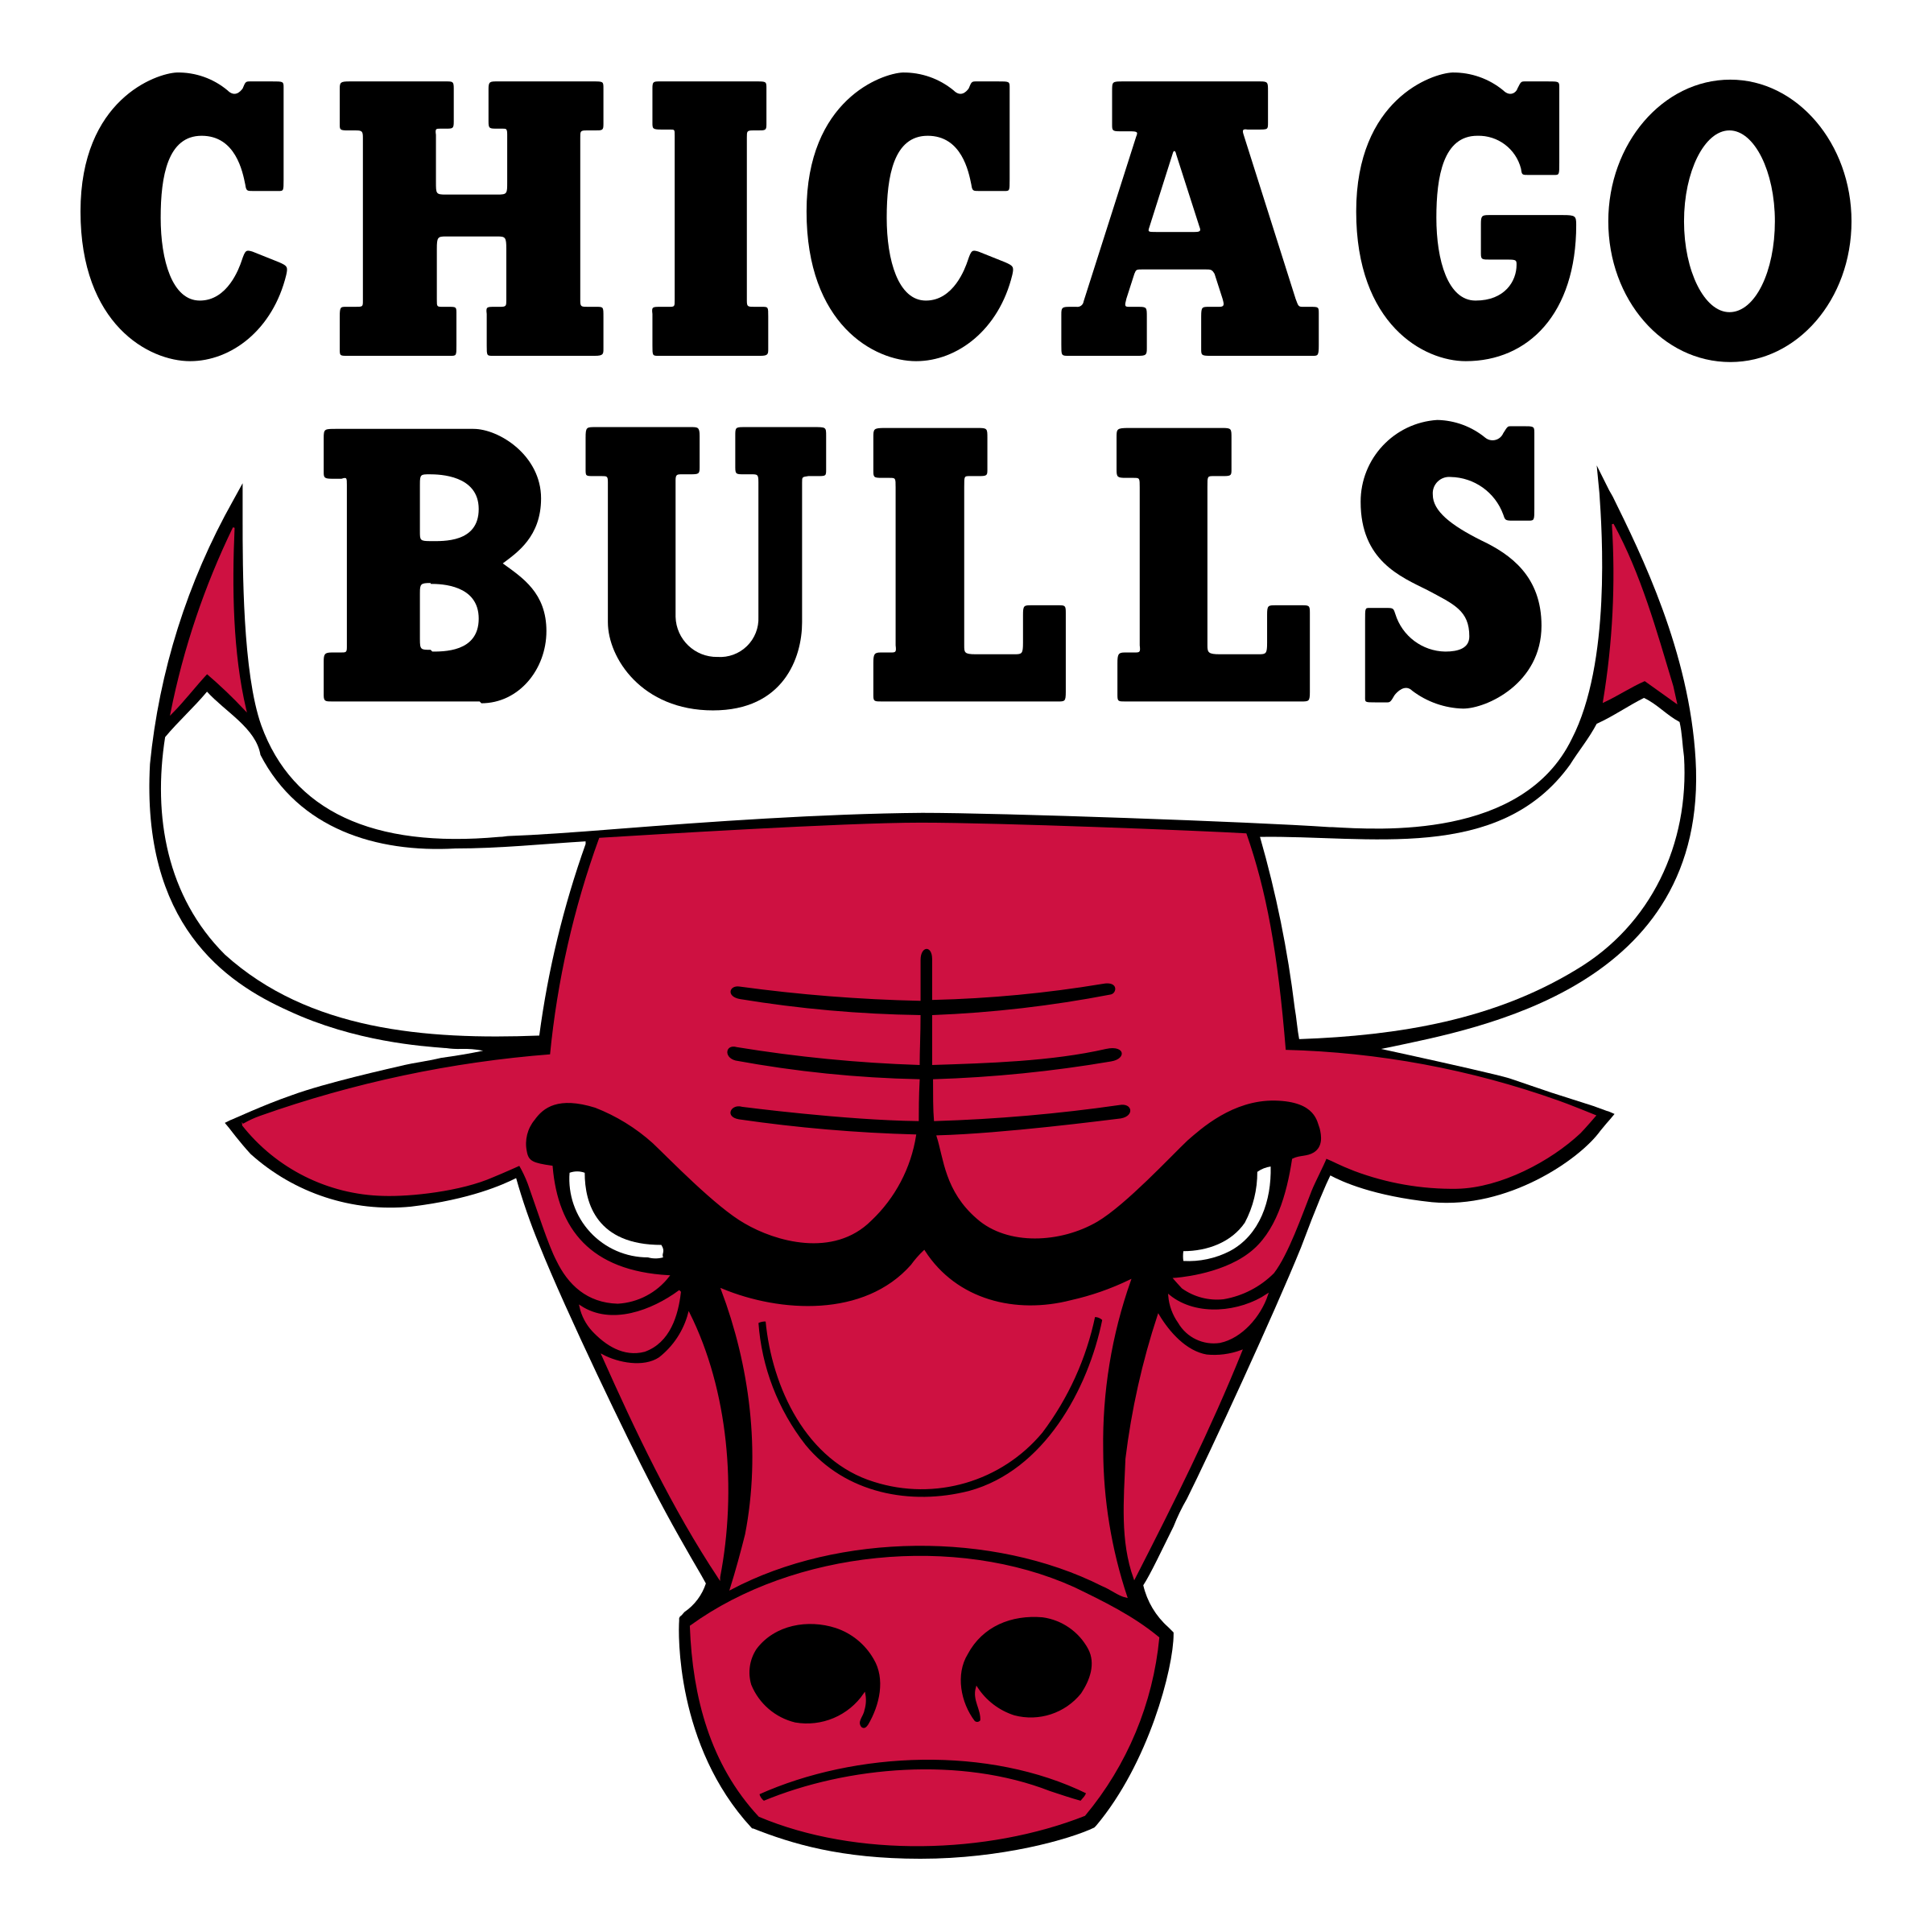 Bulls Logo - Chicago Bulls Logo PNG Transparent & SVG Vector